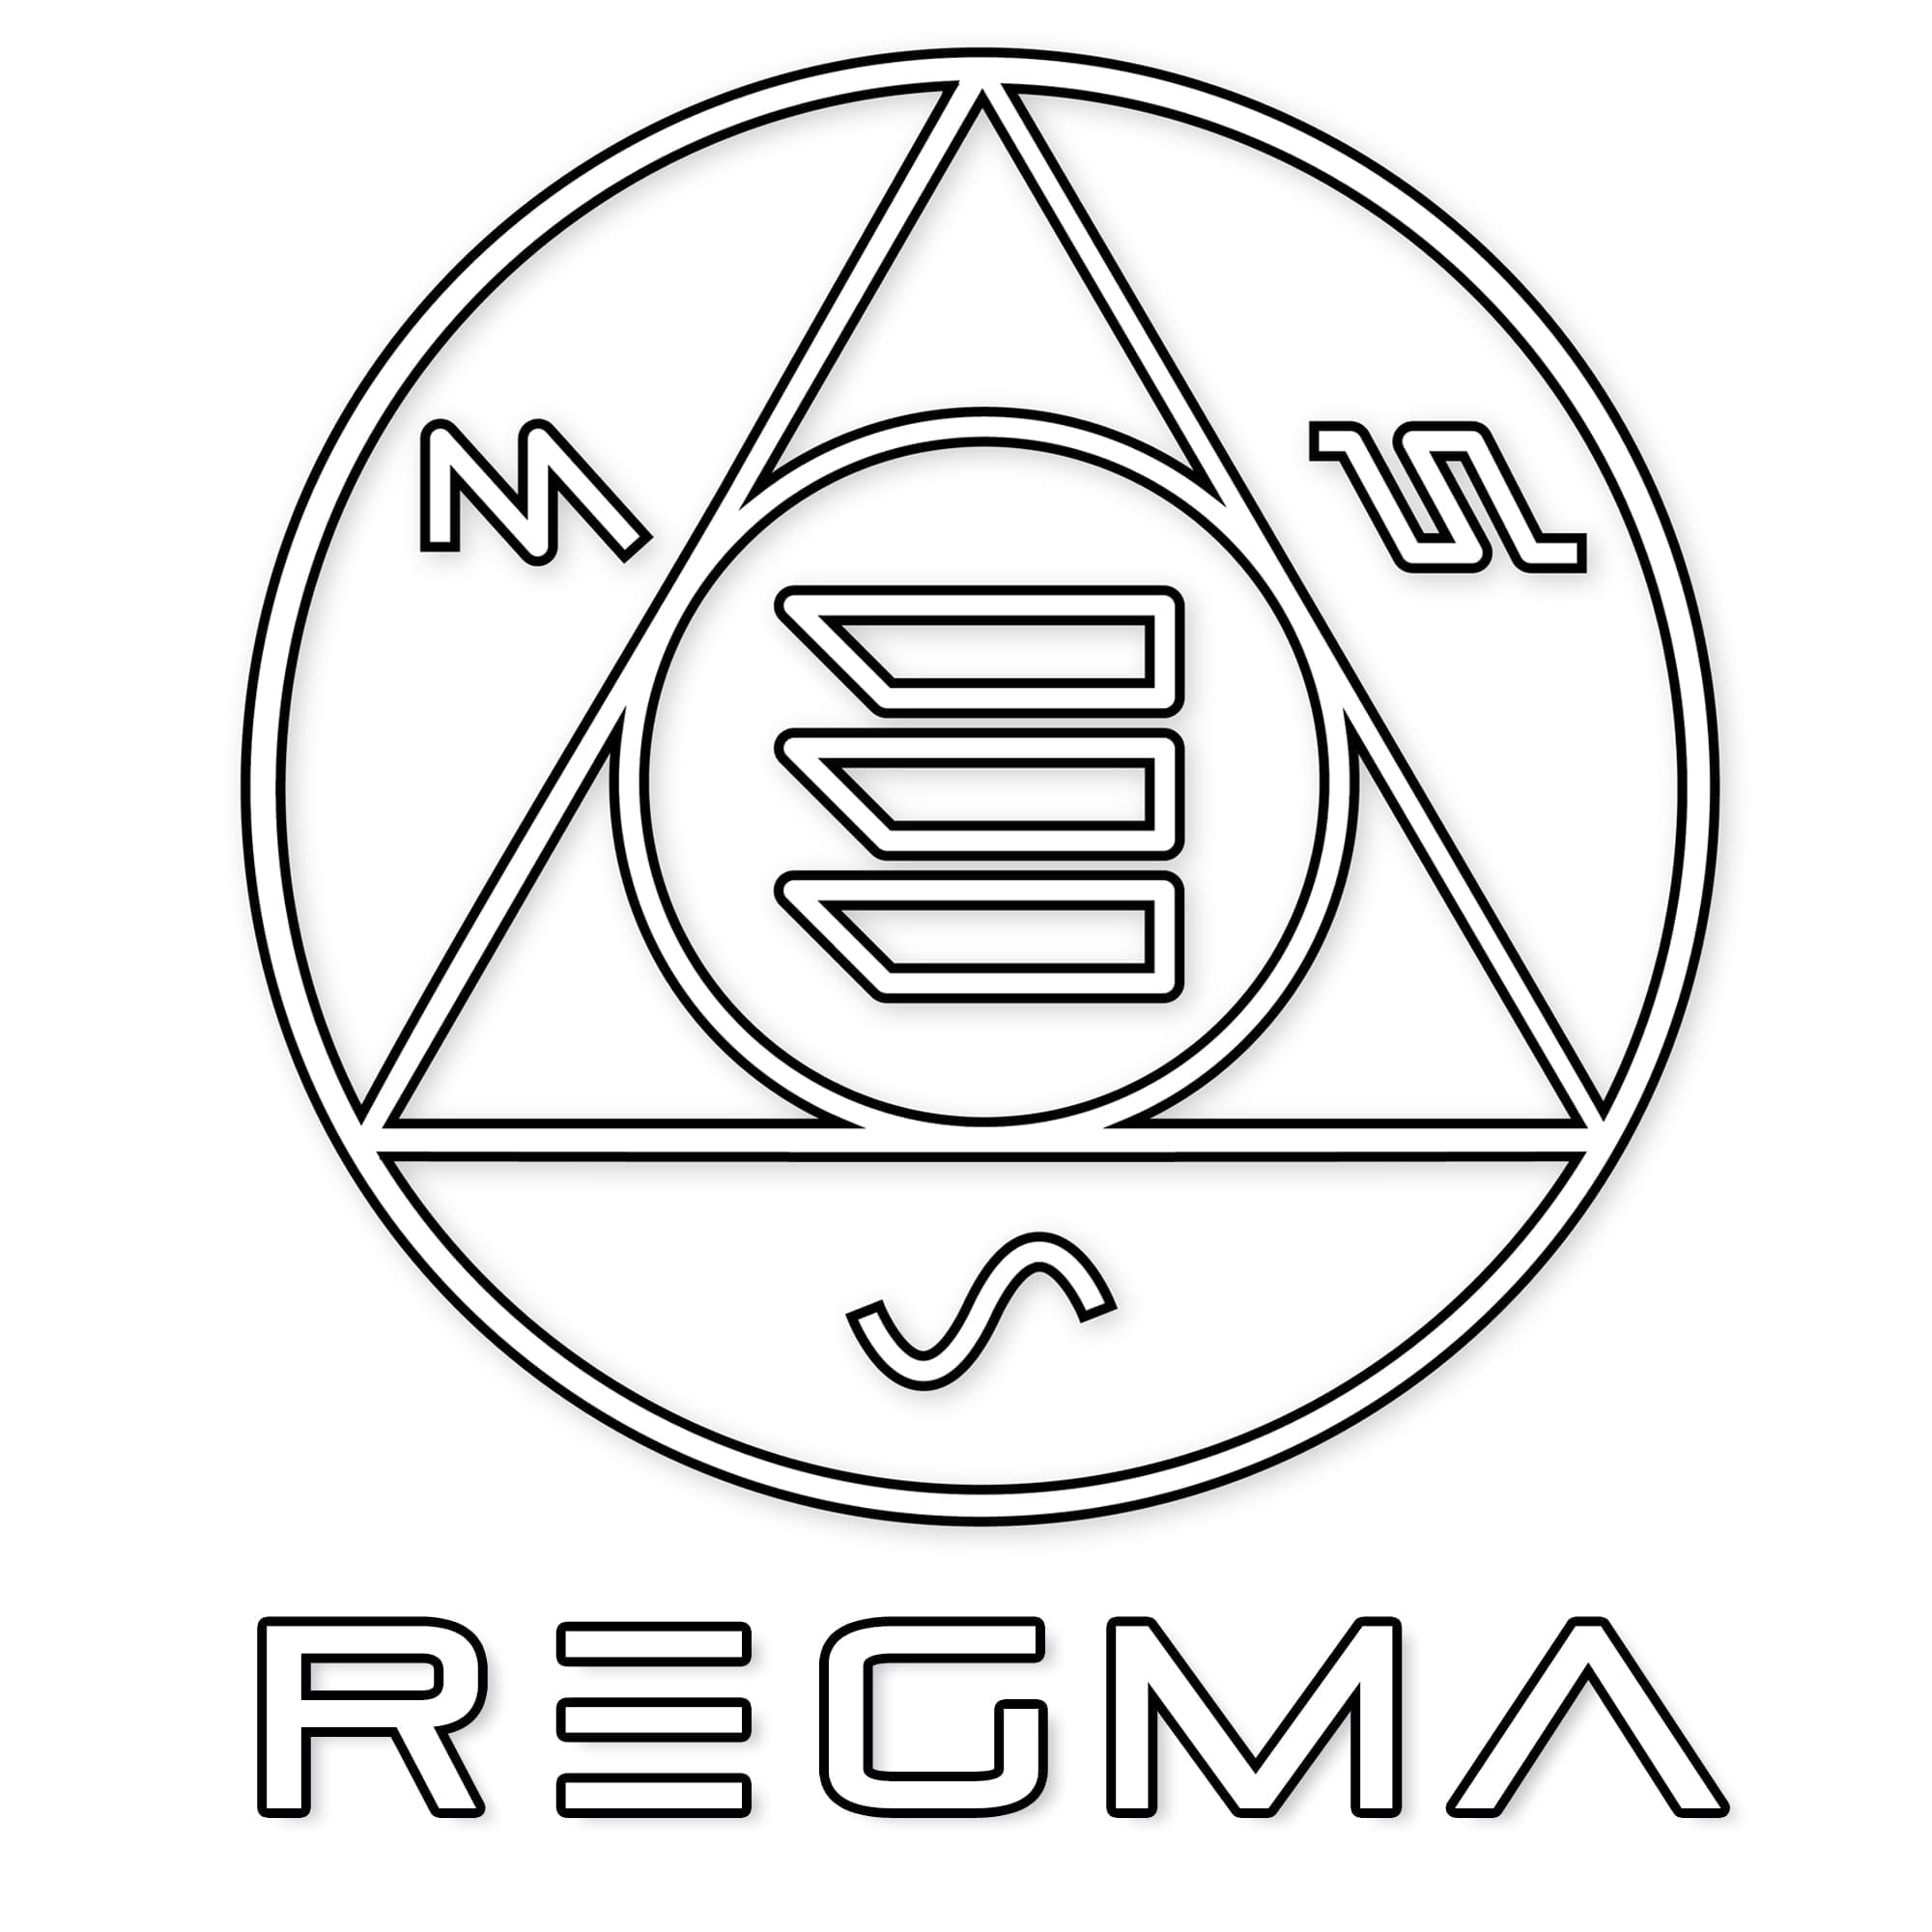 R3gma Dance Music Promotion